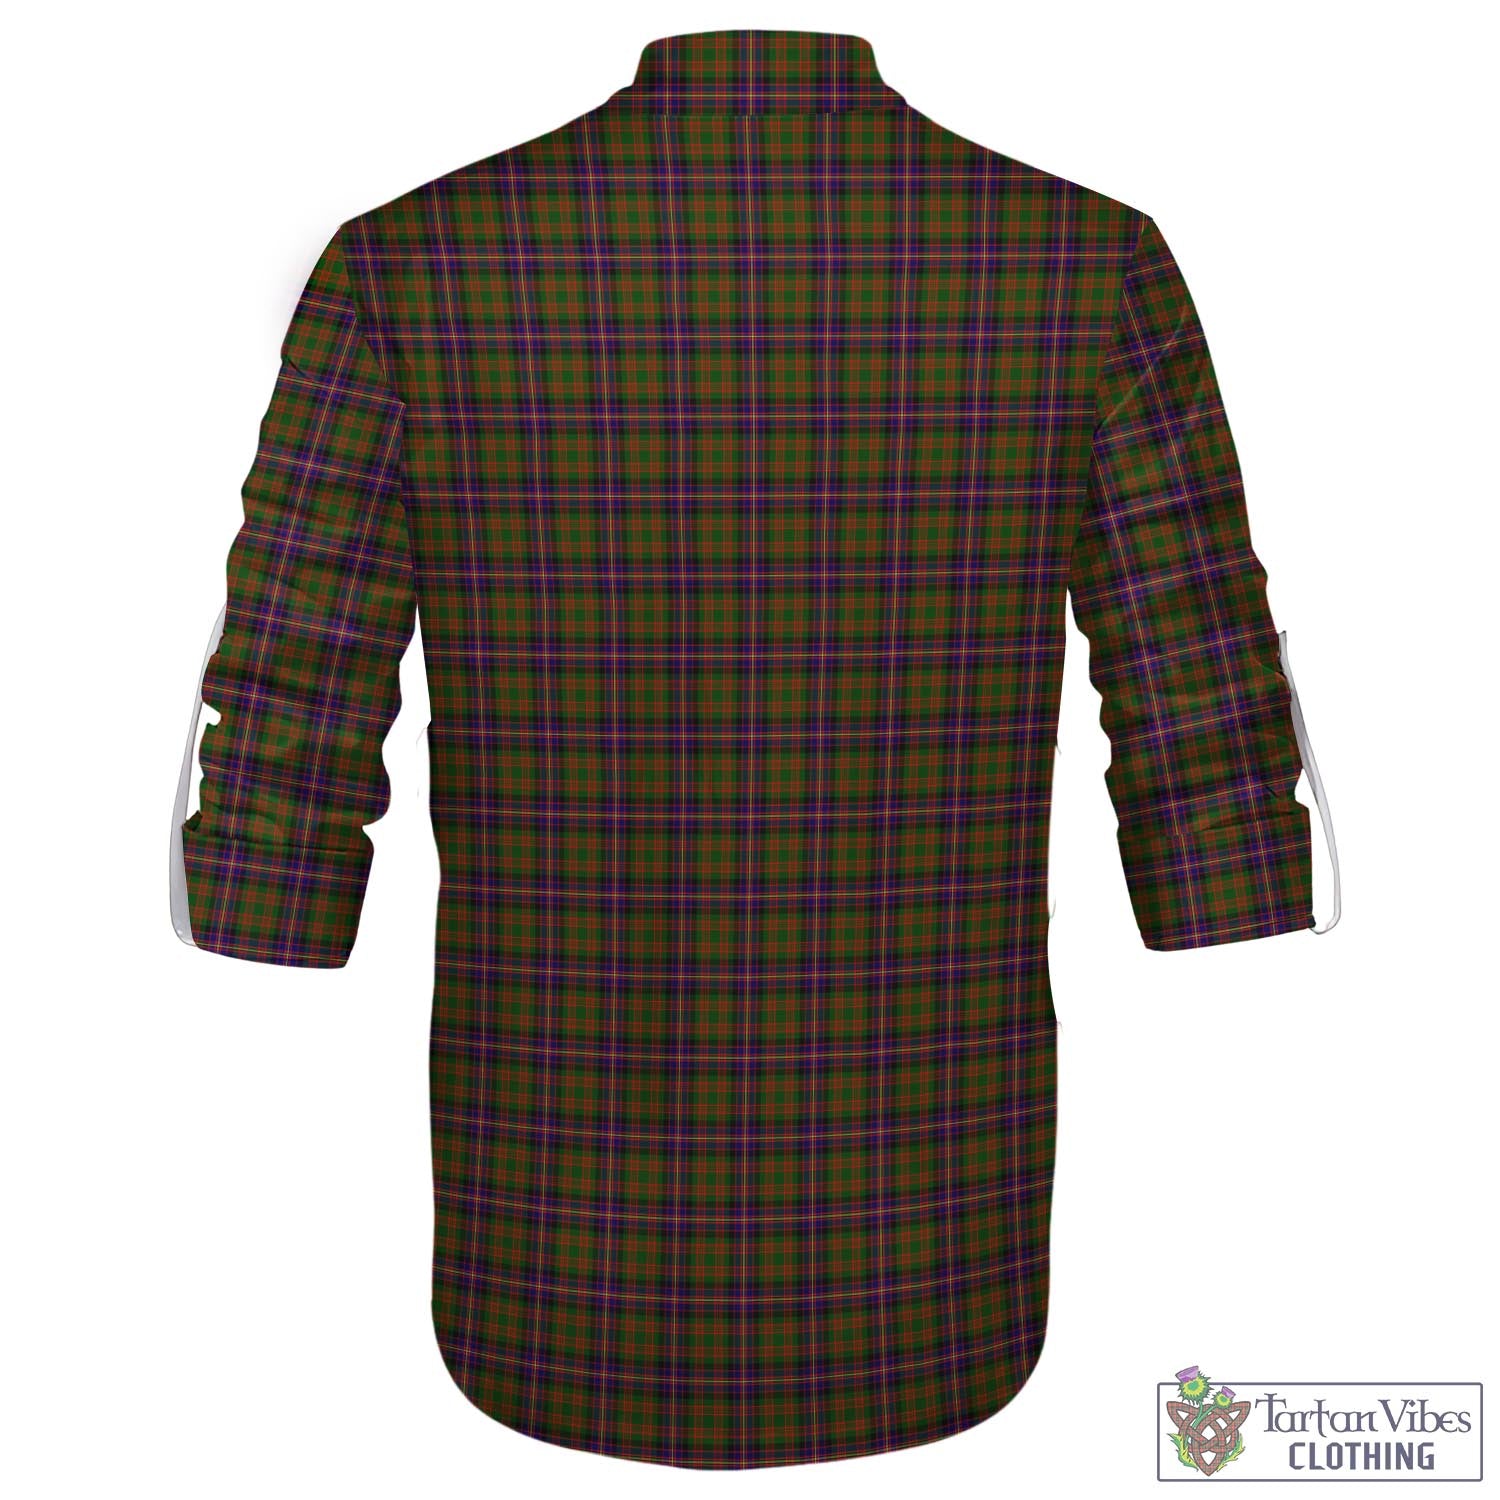 Tartan Vibes Clothing Cochrane Modern Tartan Men's Scottish Traditional Jacobite Ghillie Kilt Shirt with Family Crest